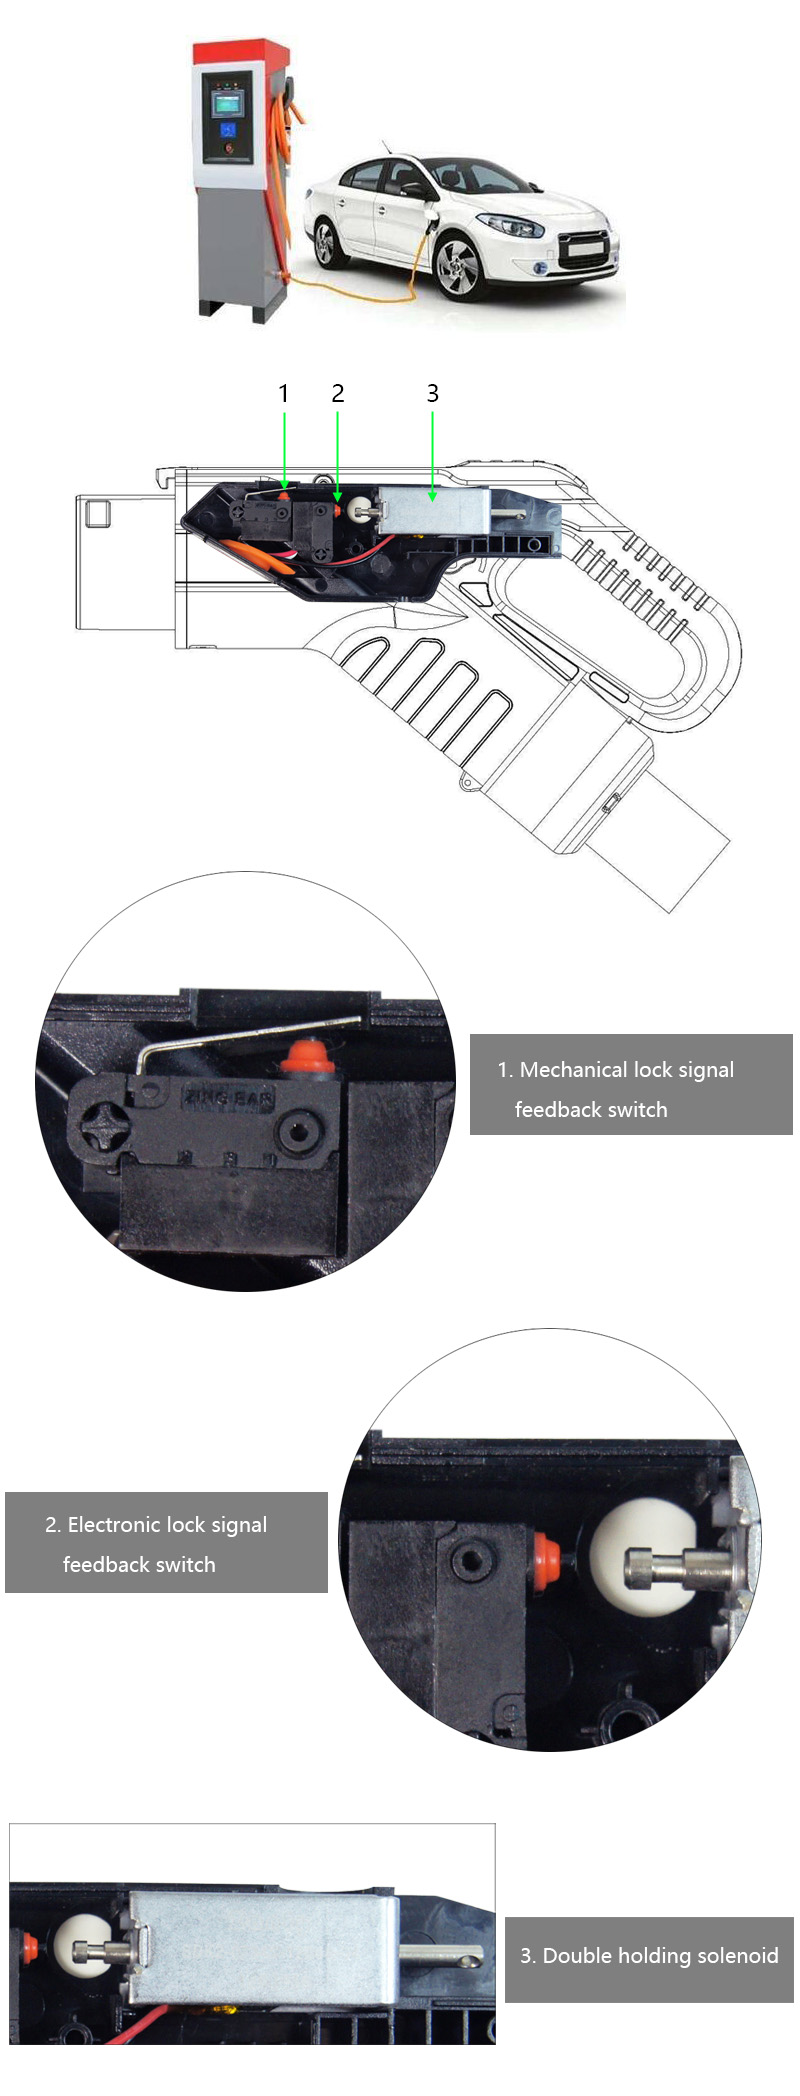 Solenoid For Electronic Lock Of Charging Gun